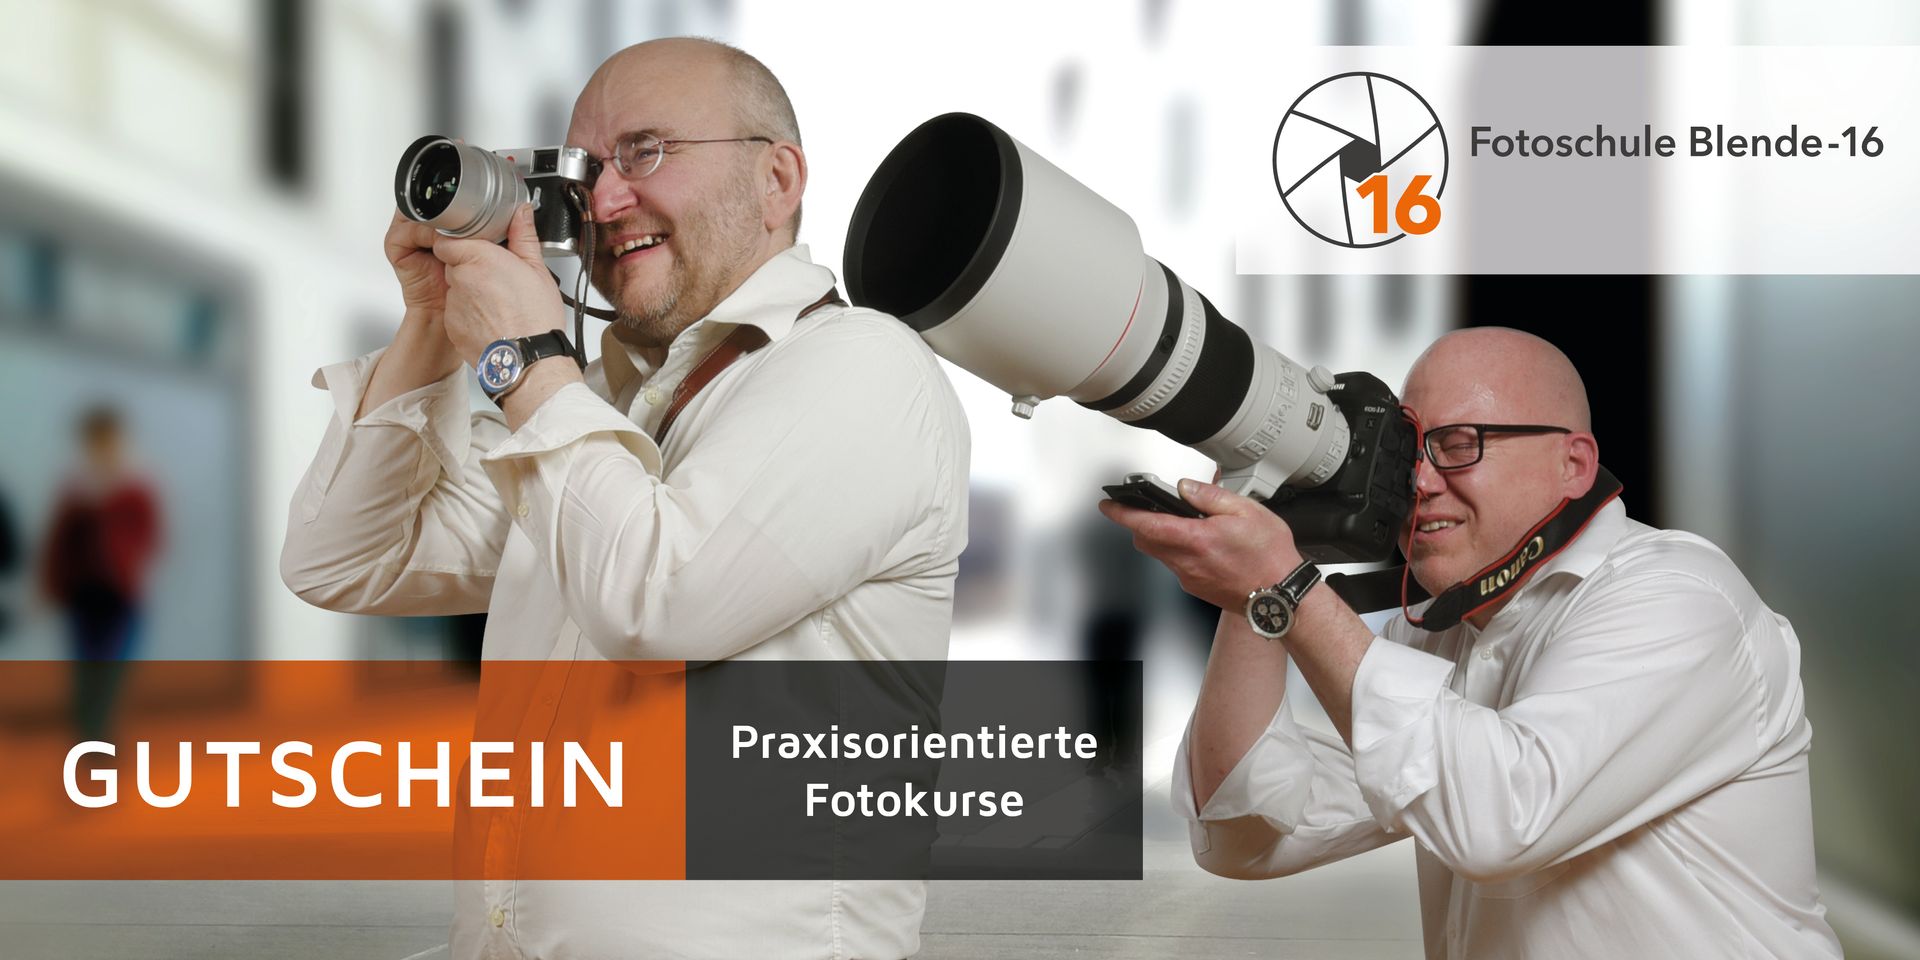 Fotokurs Gutschein für Fotokurse, Fotoworkshops und Fotoseminare an der Fotoschule Blende-16 in Nürnberg: Links Fotograf Herbert Mrosek, rechts Diplom Fotodesigner Alexander Mrosek.